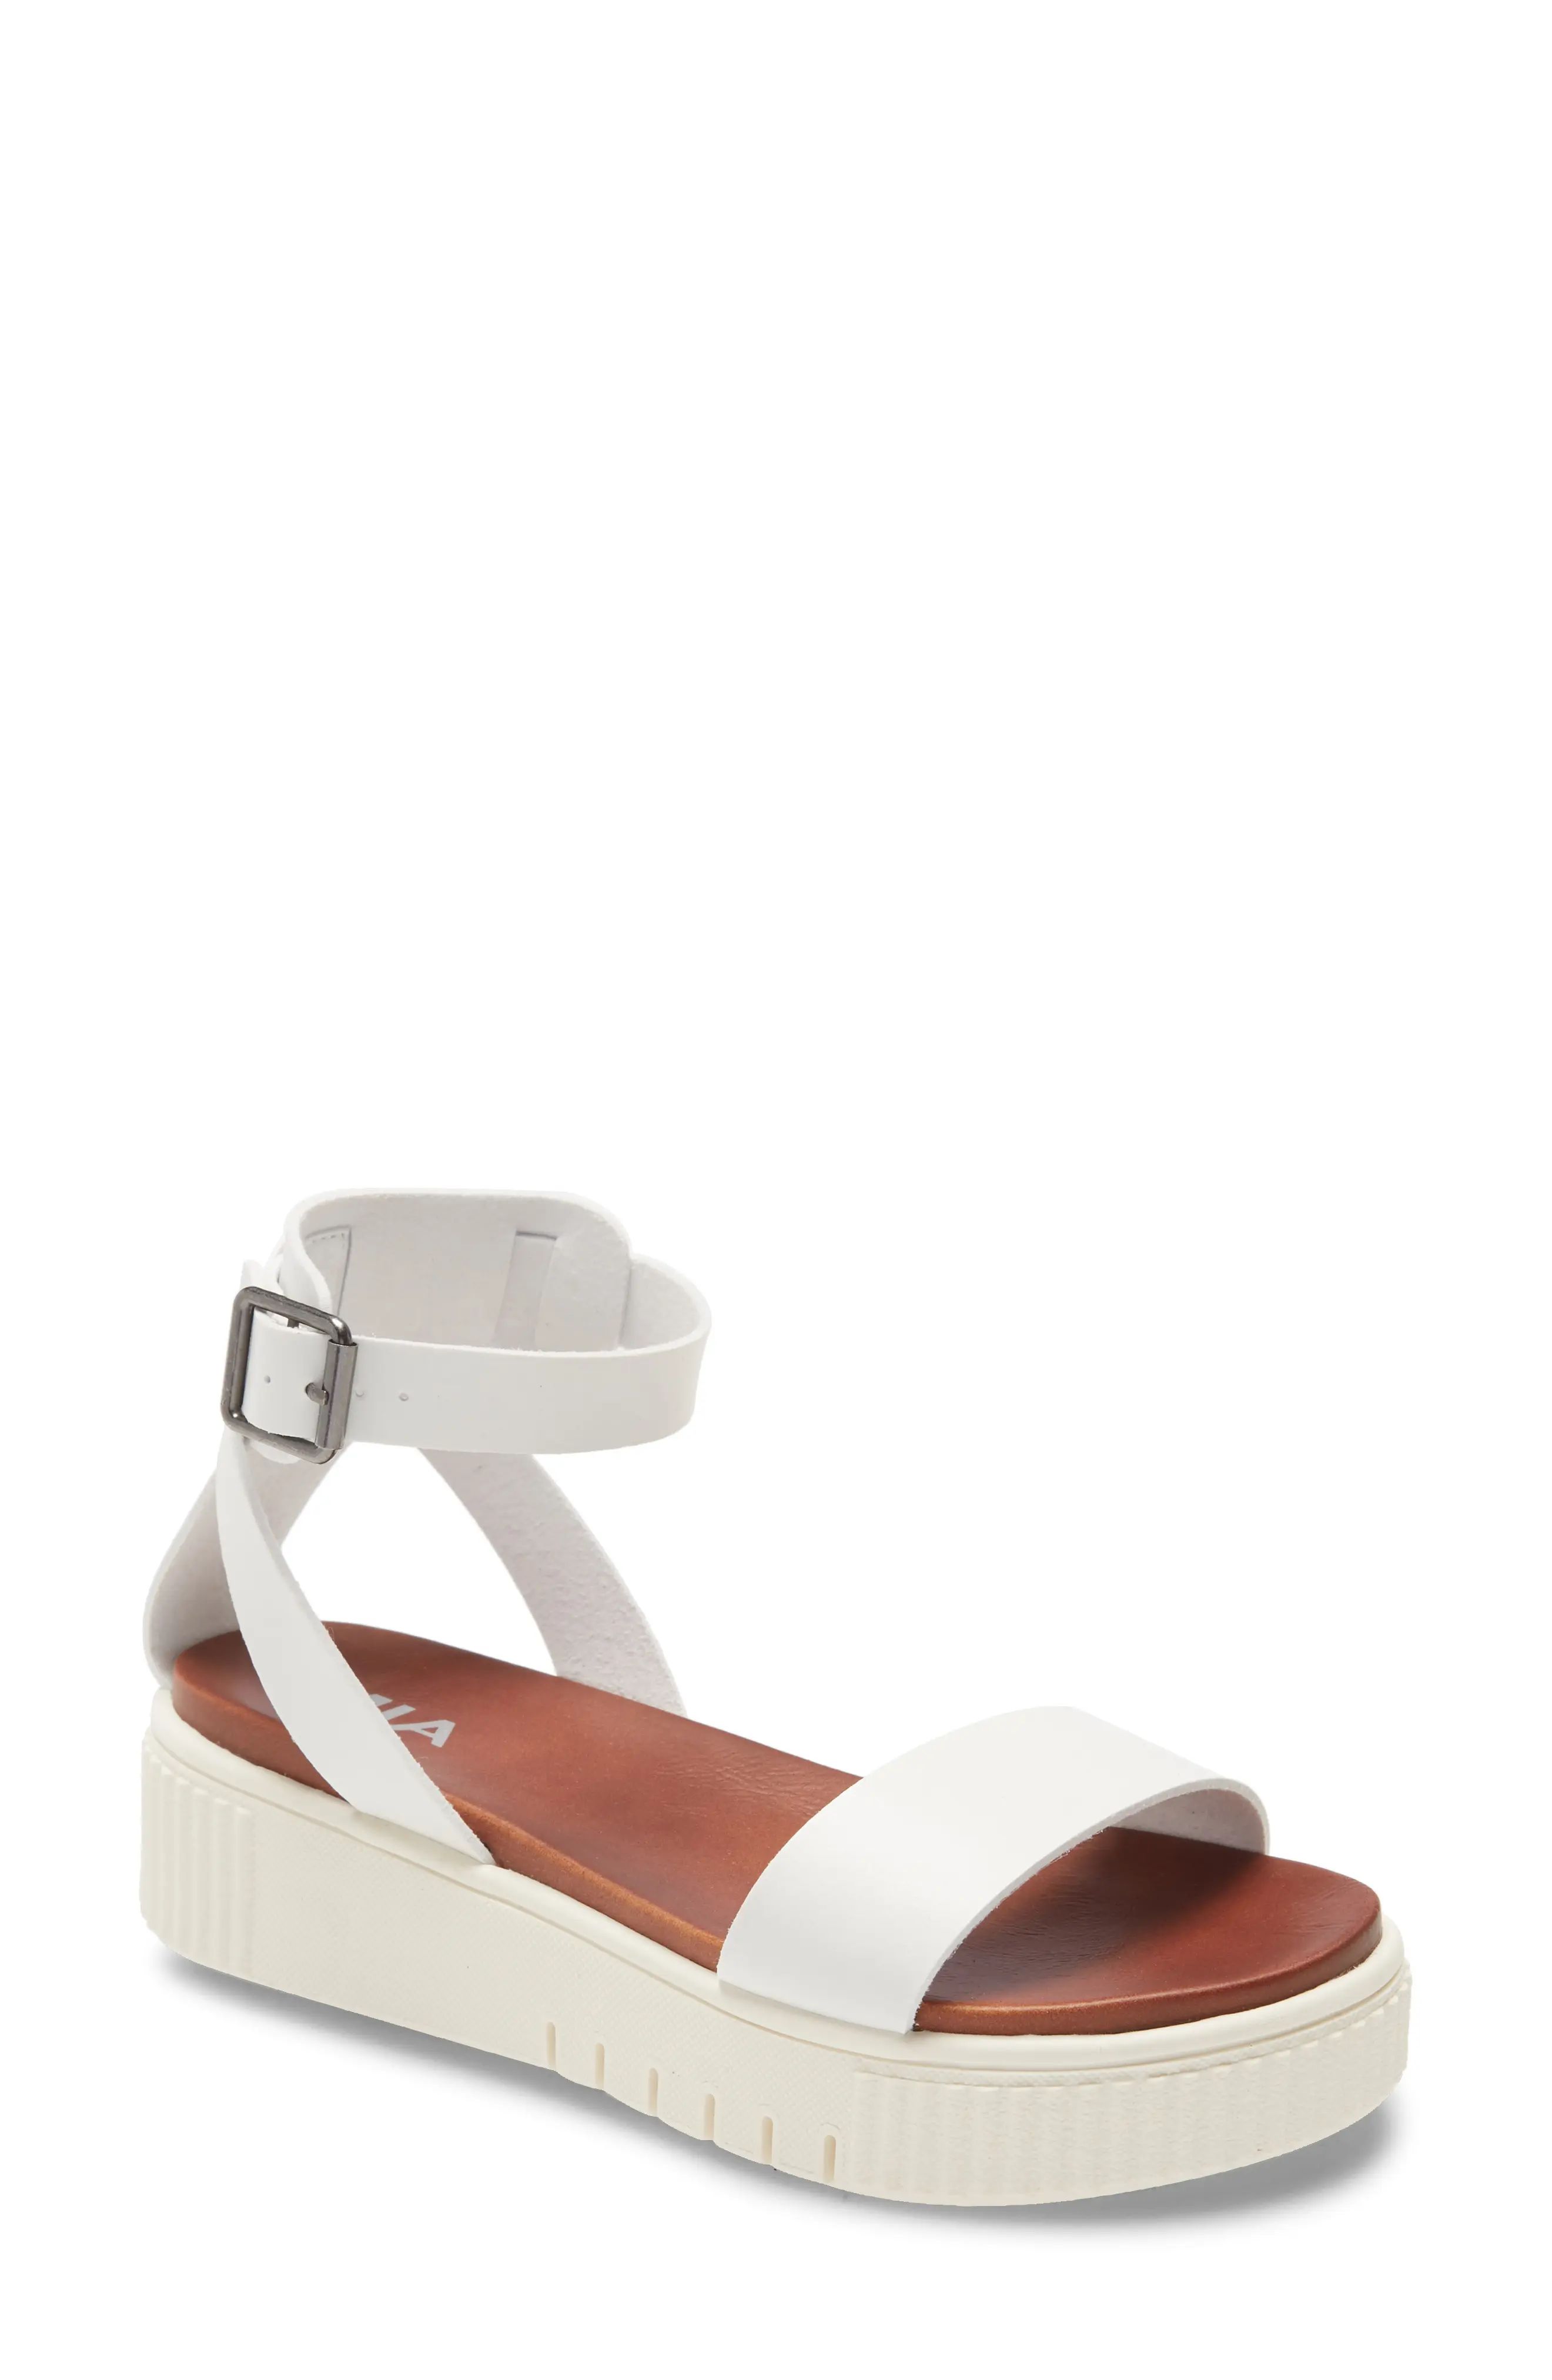 Women's Mia Lunna Platform Ankle Strap Sandal, Size 5.5 M - White | Nordstrom